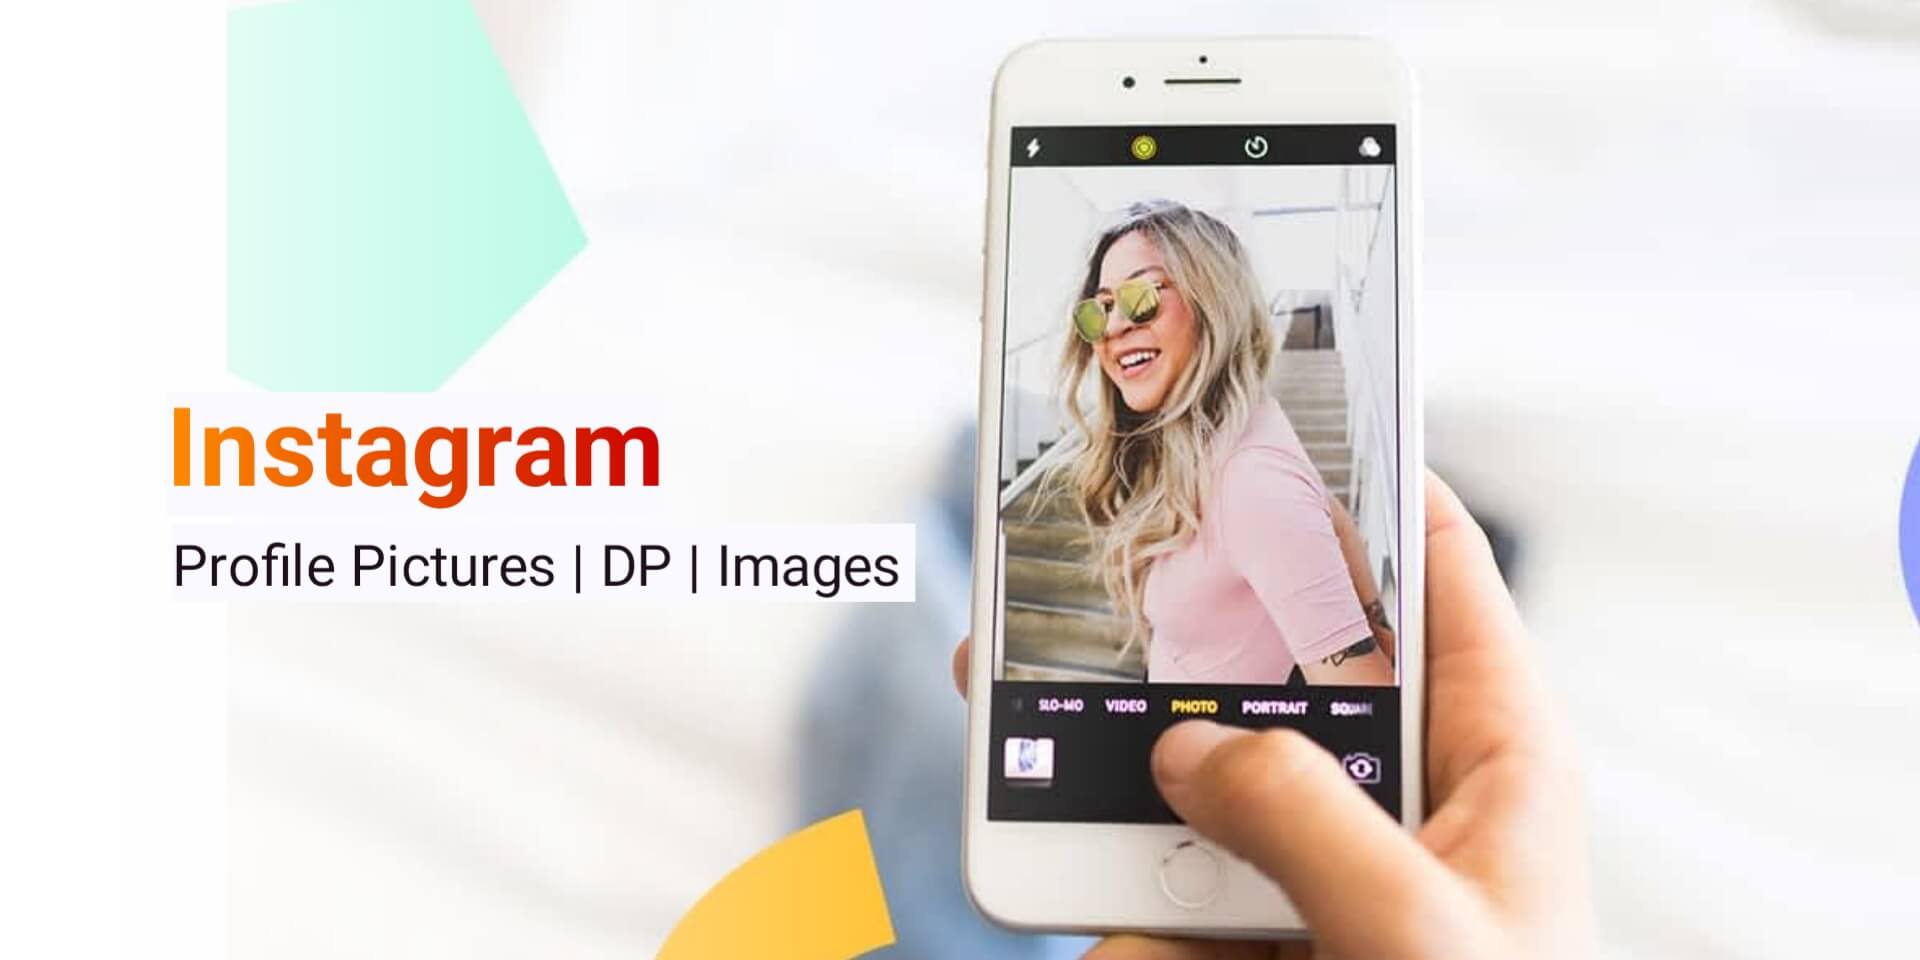 Instagram DP Images | 300+ Best Profile Pictures for Instagram